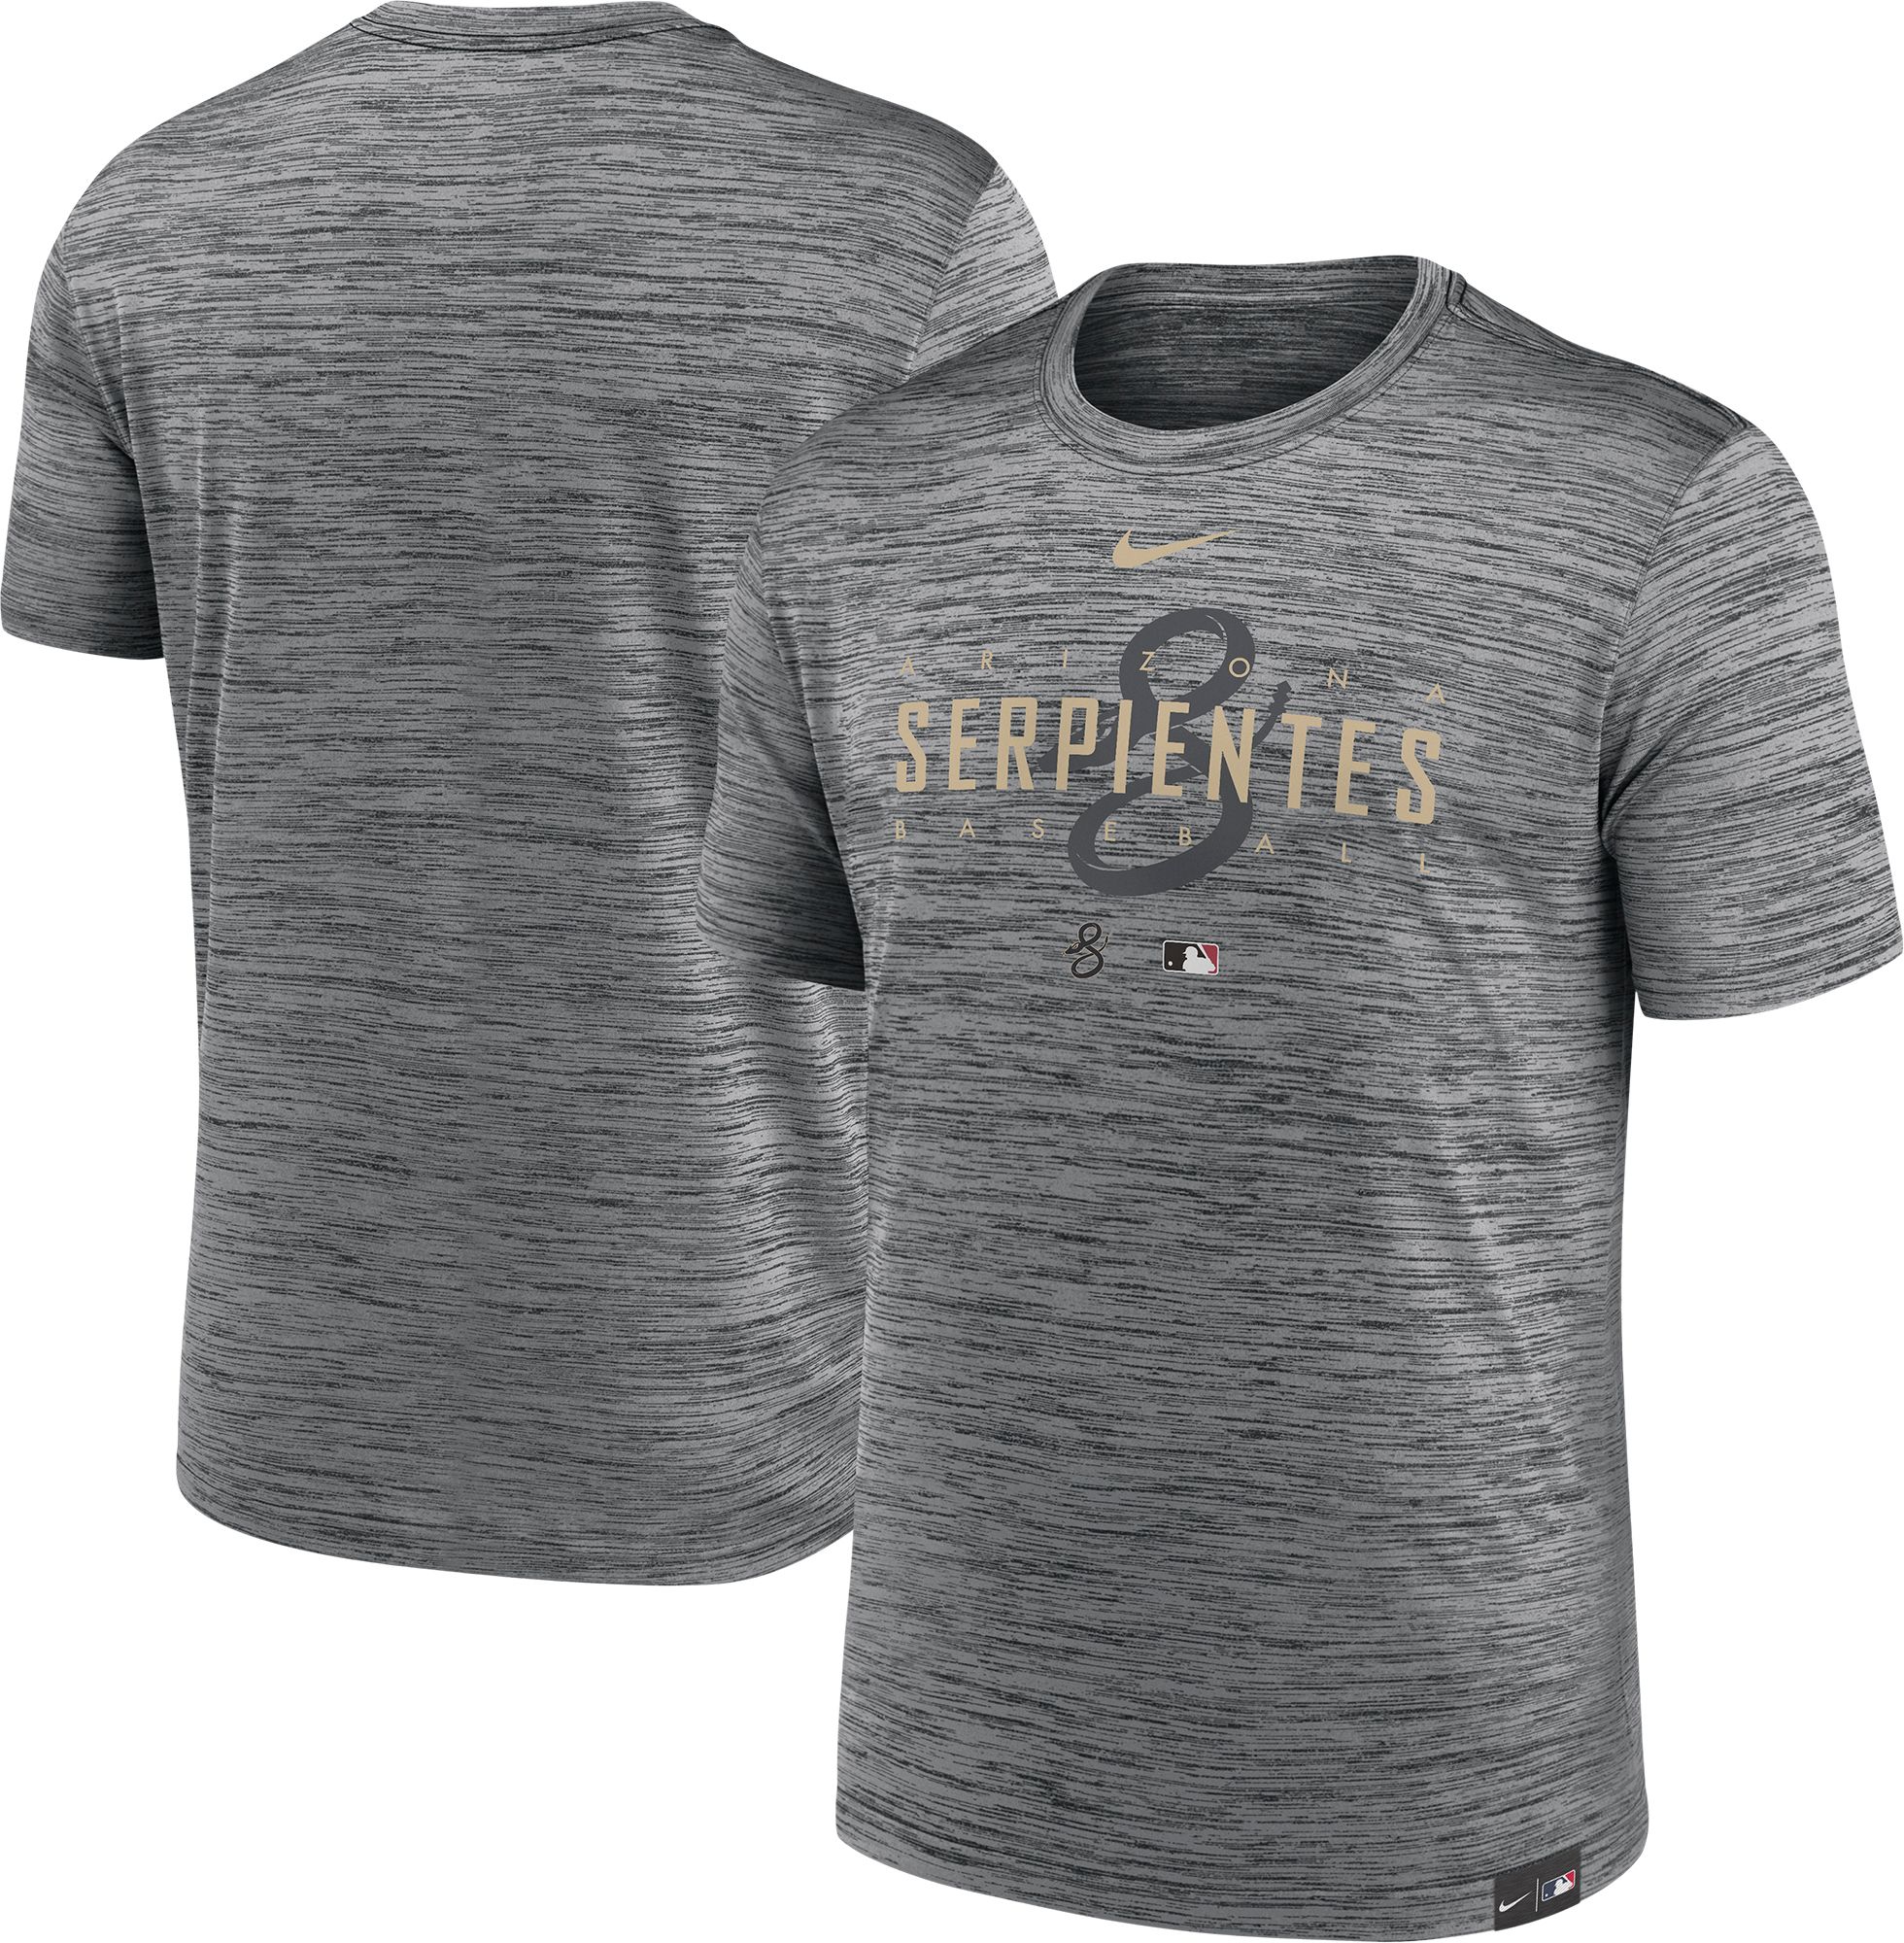 Arizona Diamondbacks: Team reveals City Connect 'Serpientes' jerseys